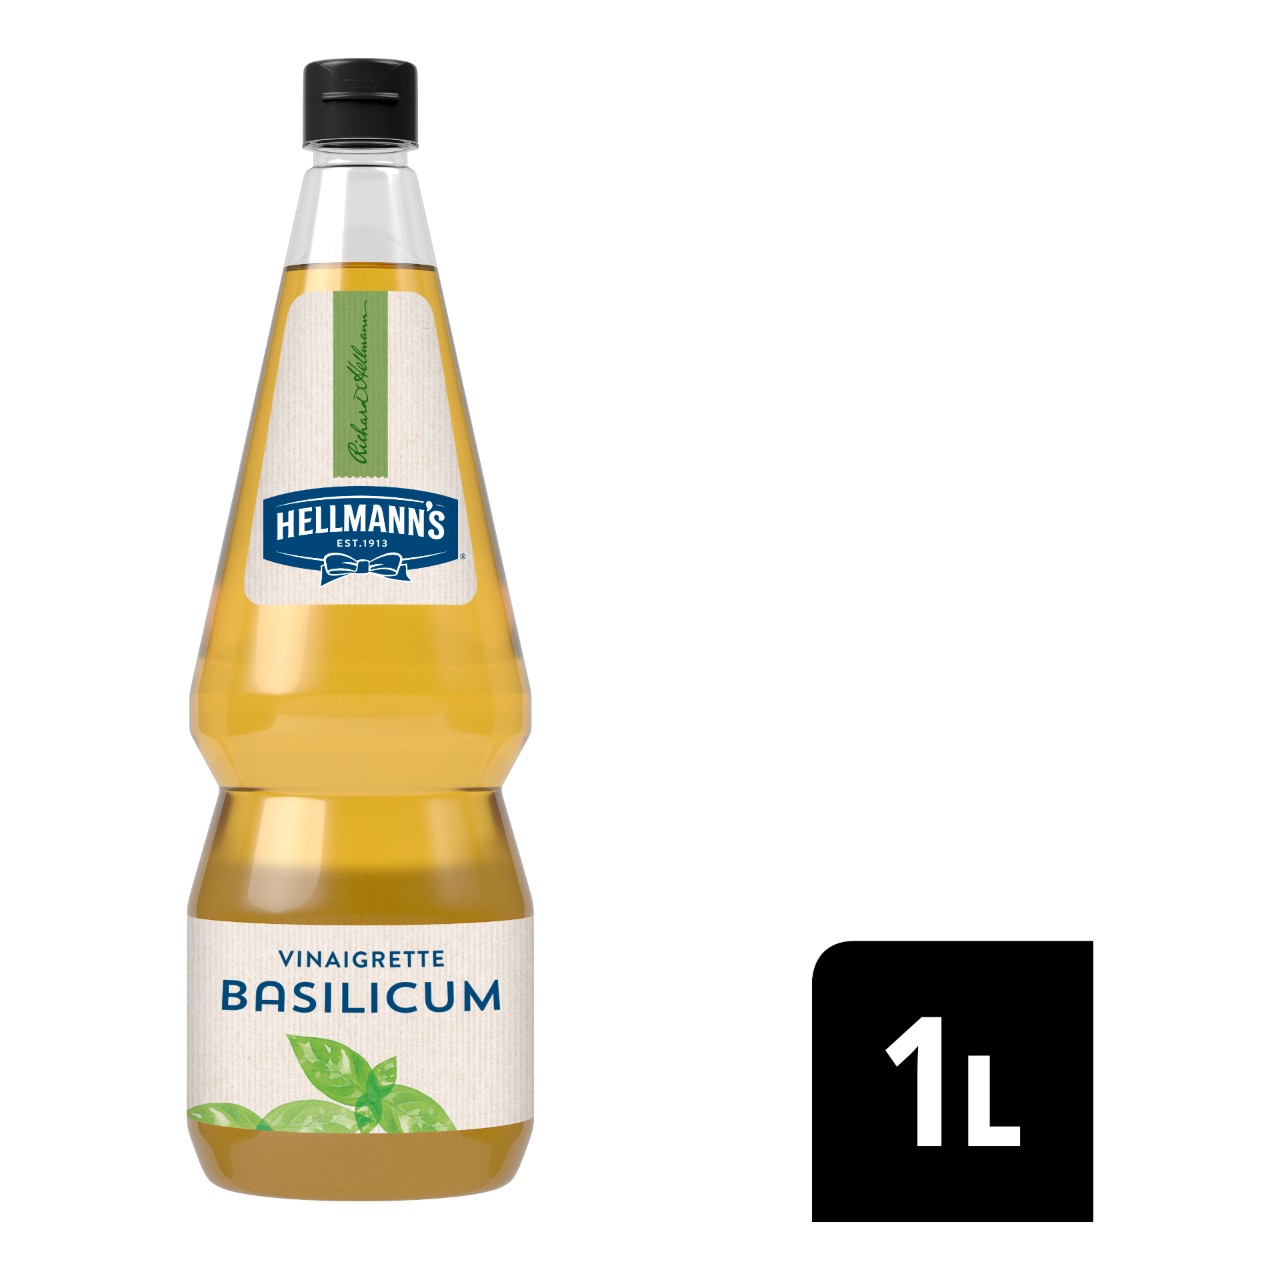 vinaigrette basilicum